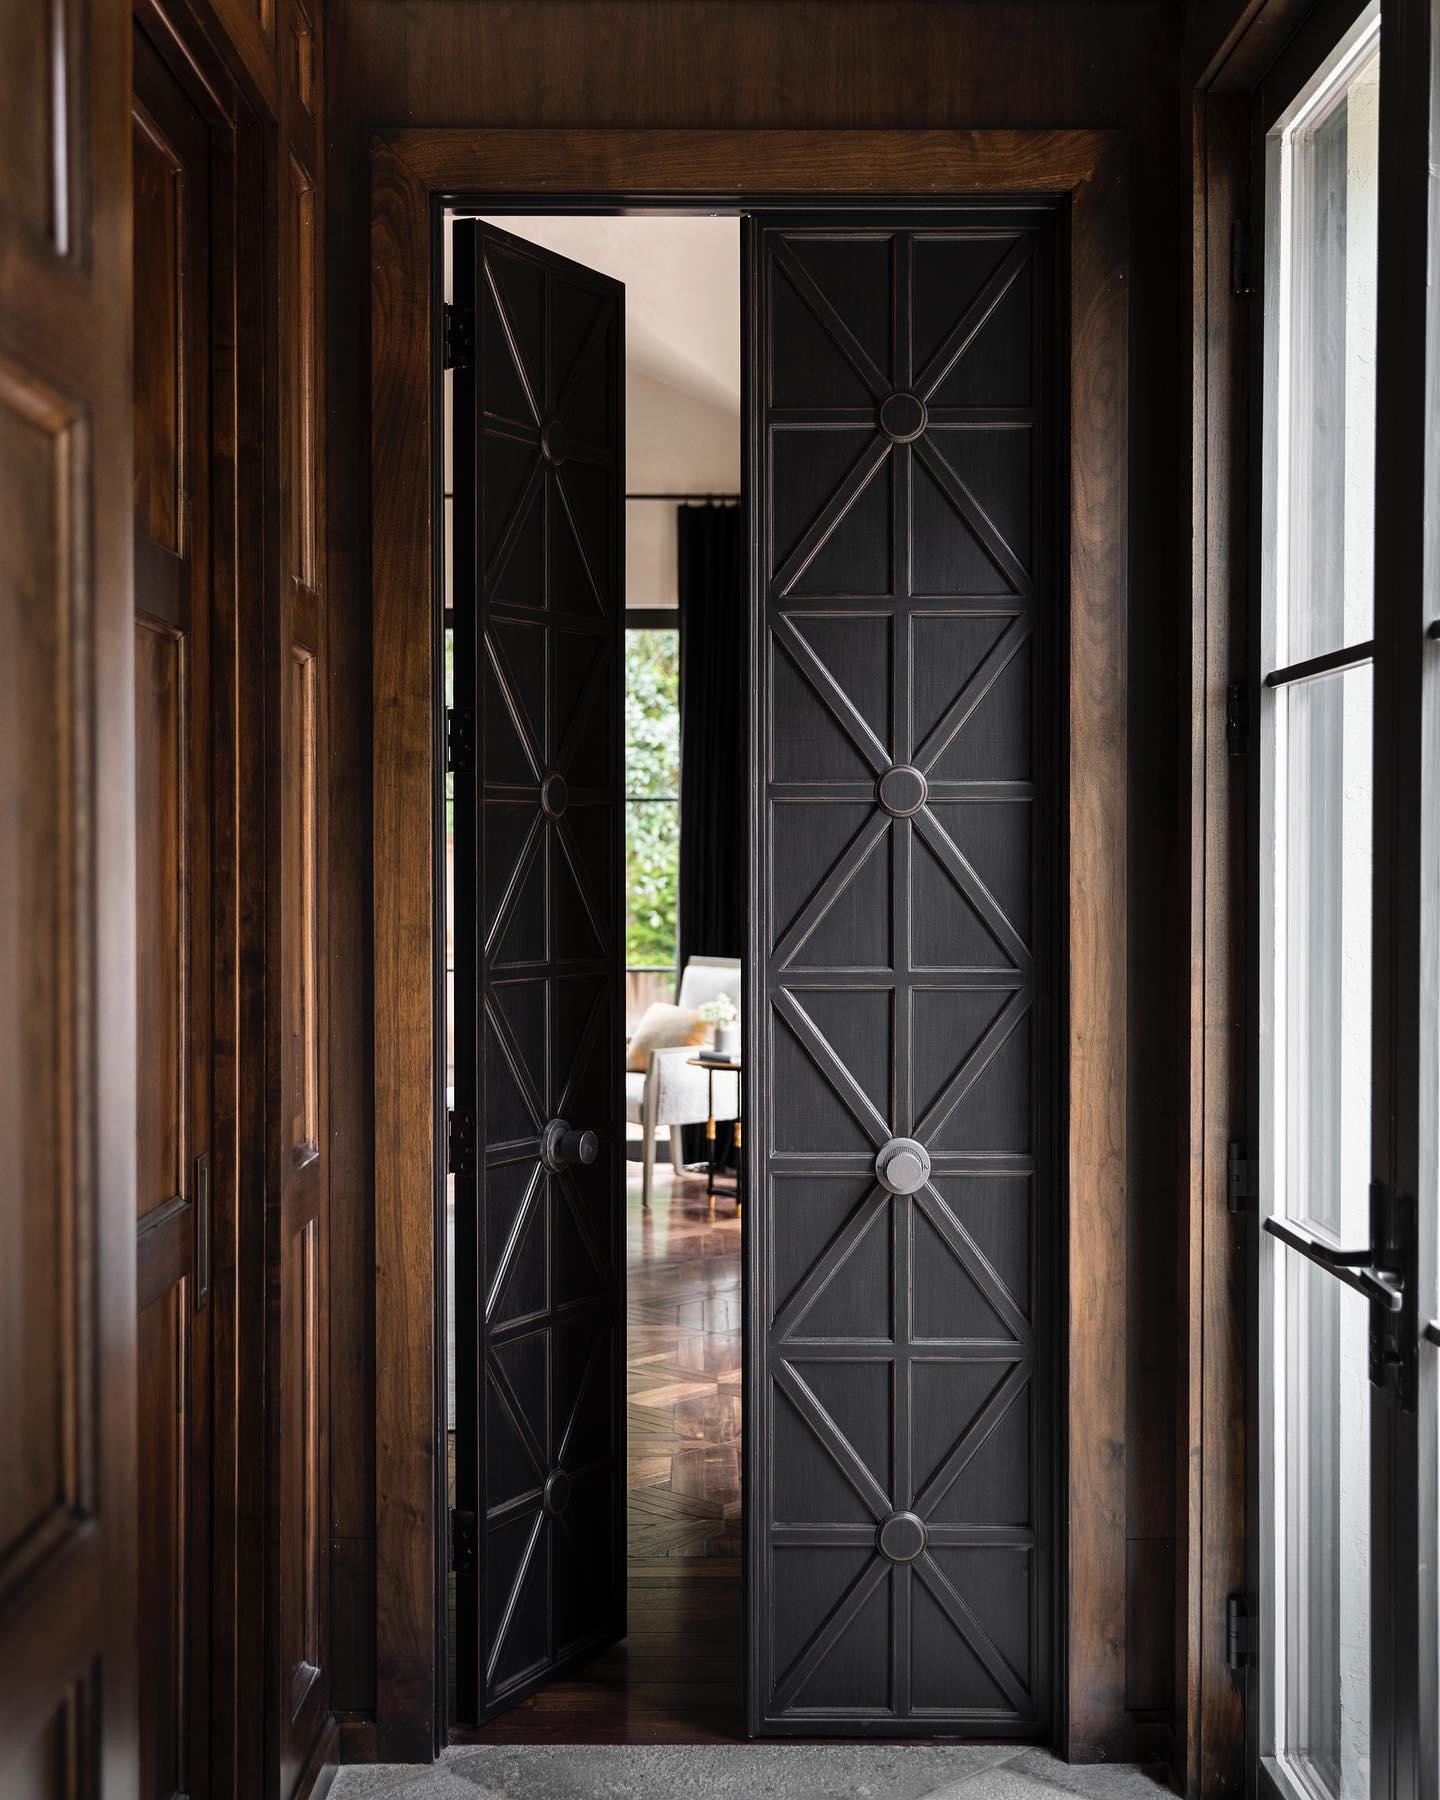 Magnificent doors - Marie Flanigan Interiors.